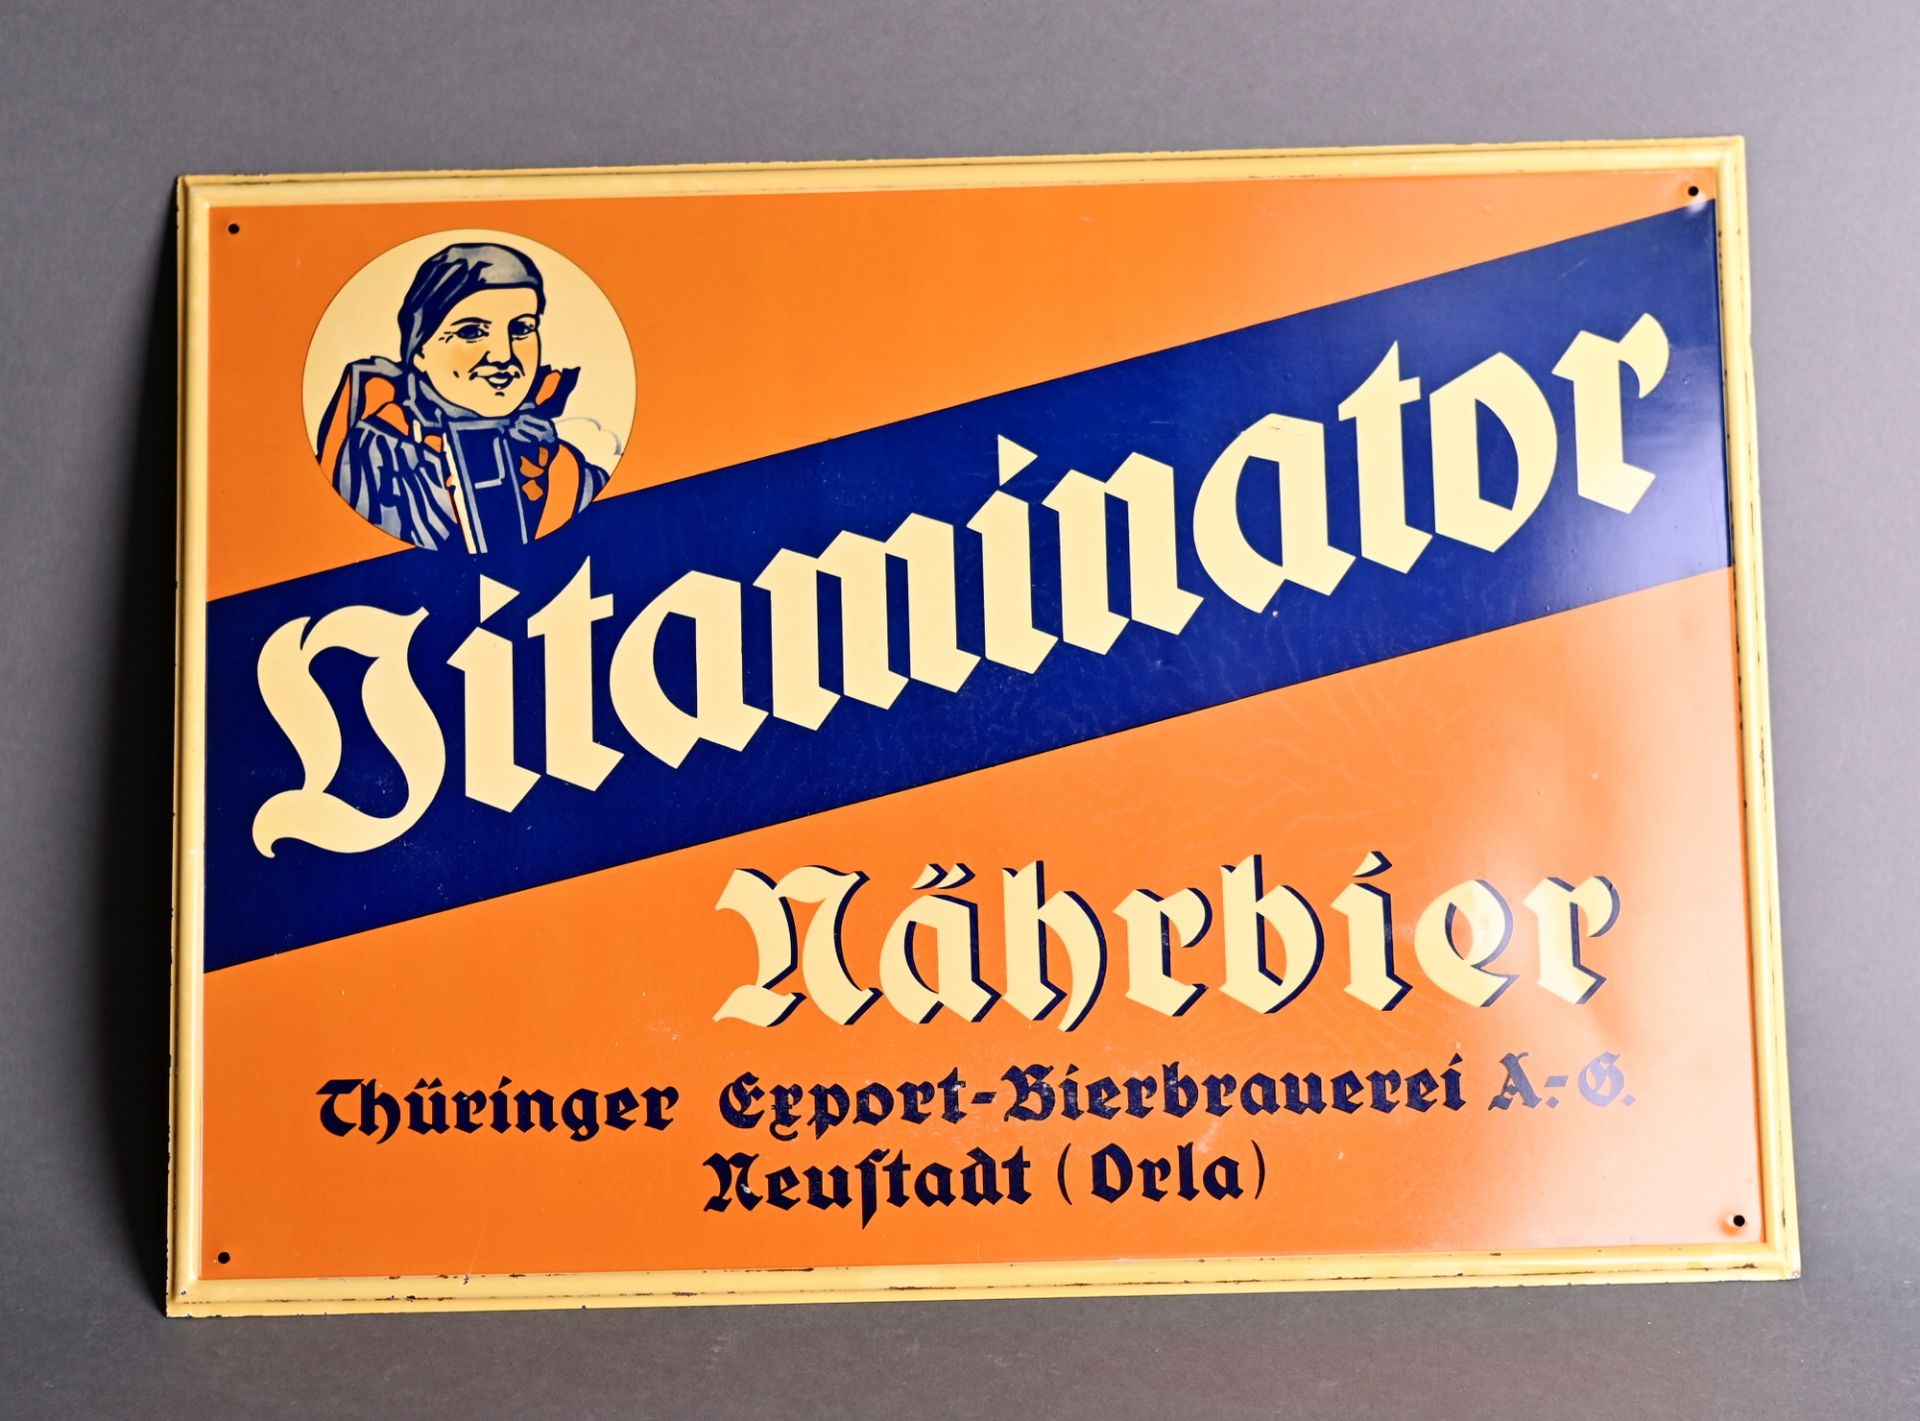 Blechschild "Vitaminator" Nährbier, Thüringer Export-Bierbrauerei Neustadt (Orla), Herst. Union